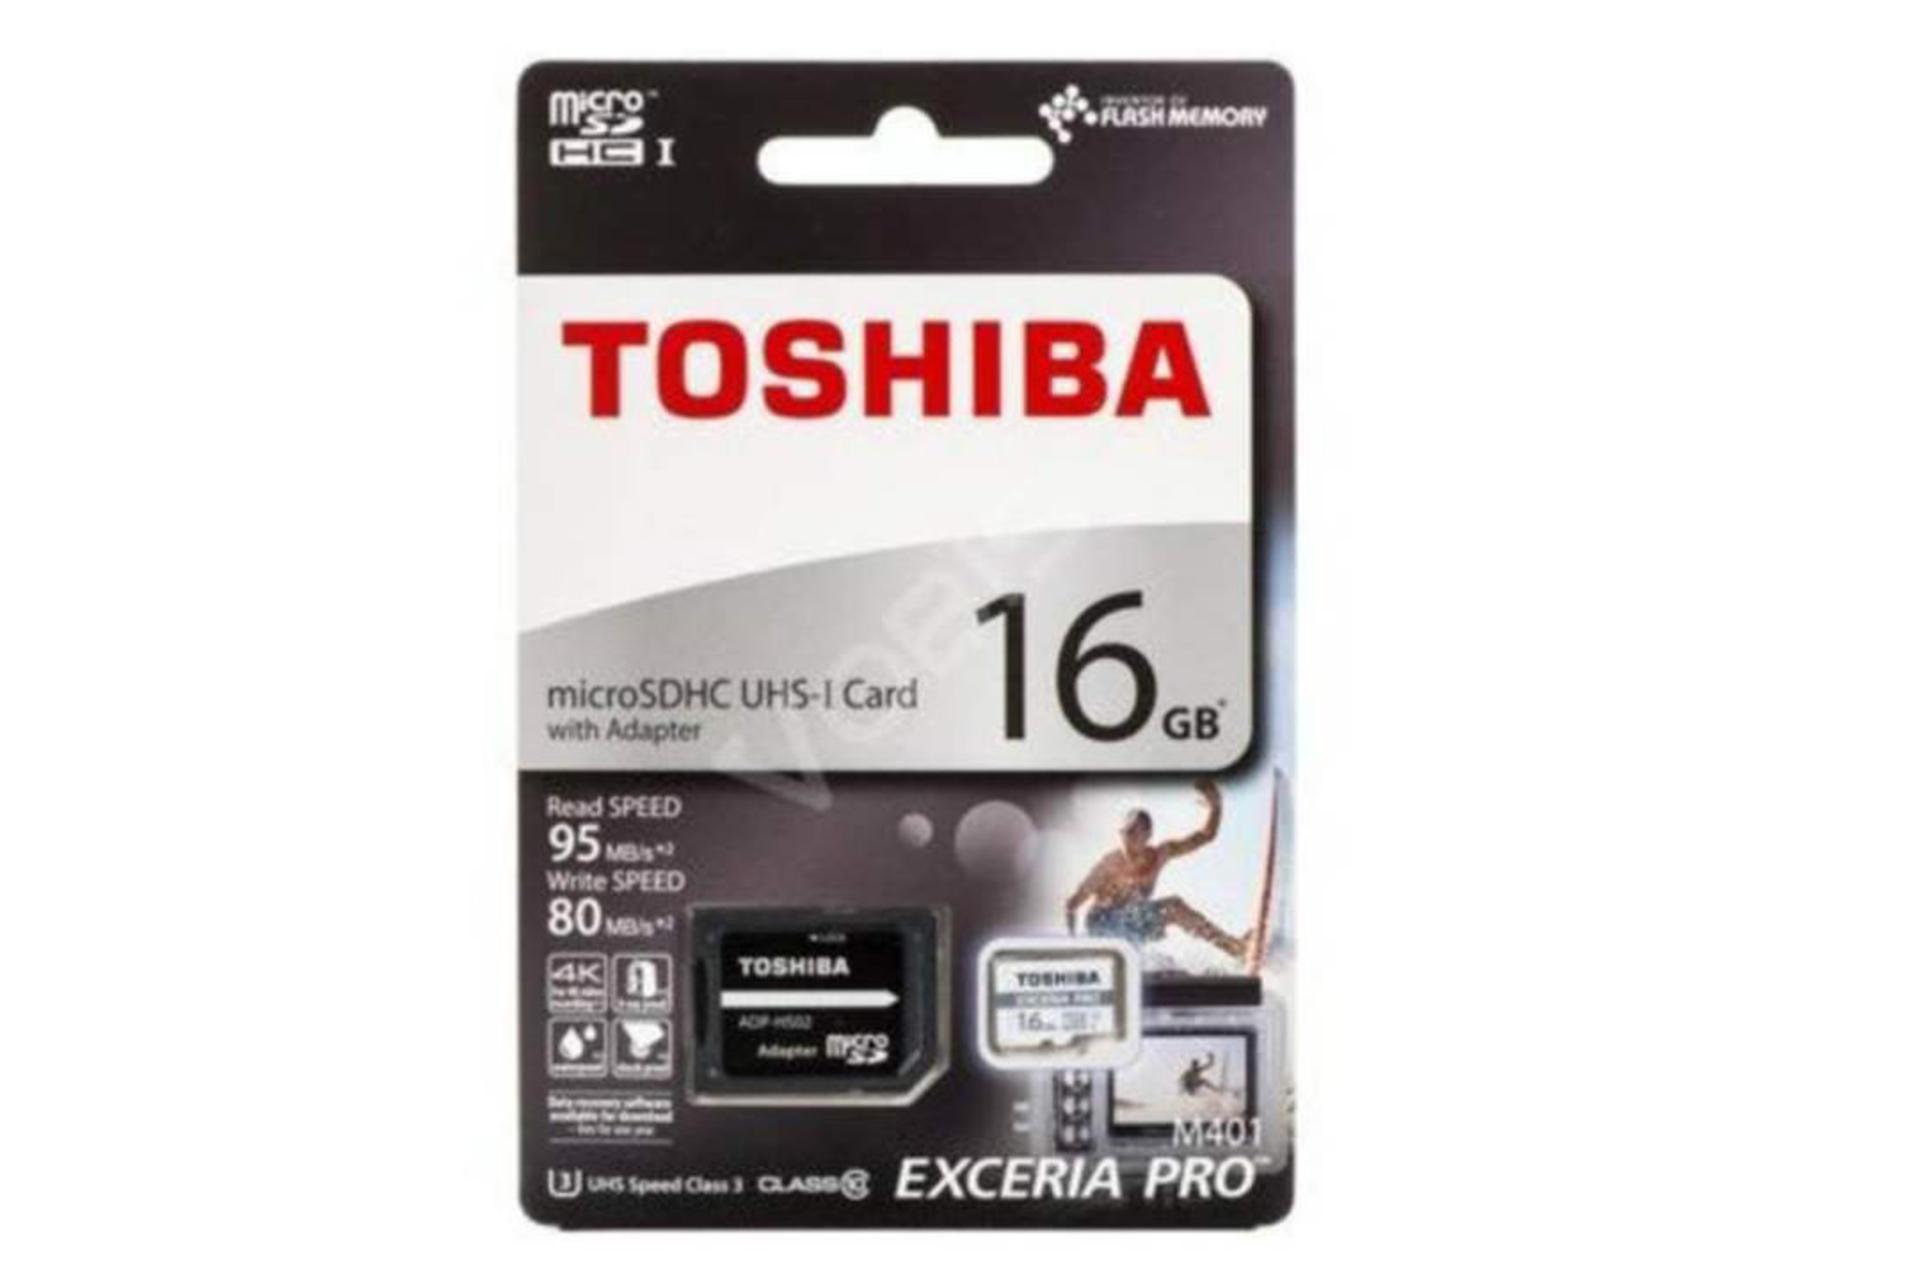 Toshiba M401 microSDHC Class 10 UHS-I U1 16GB